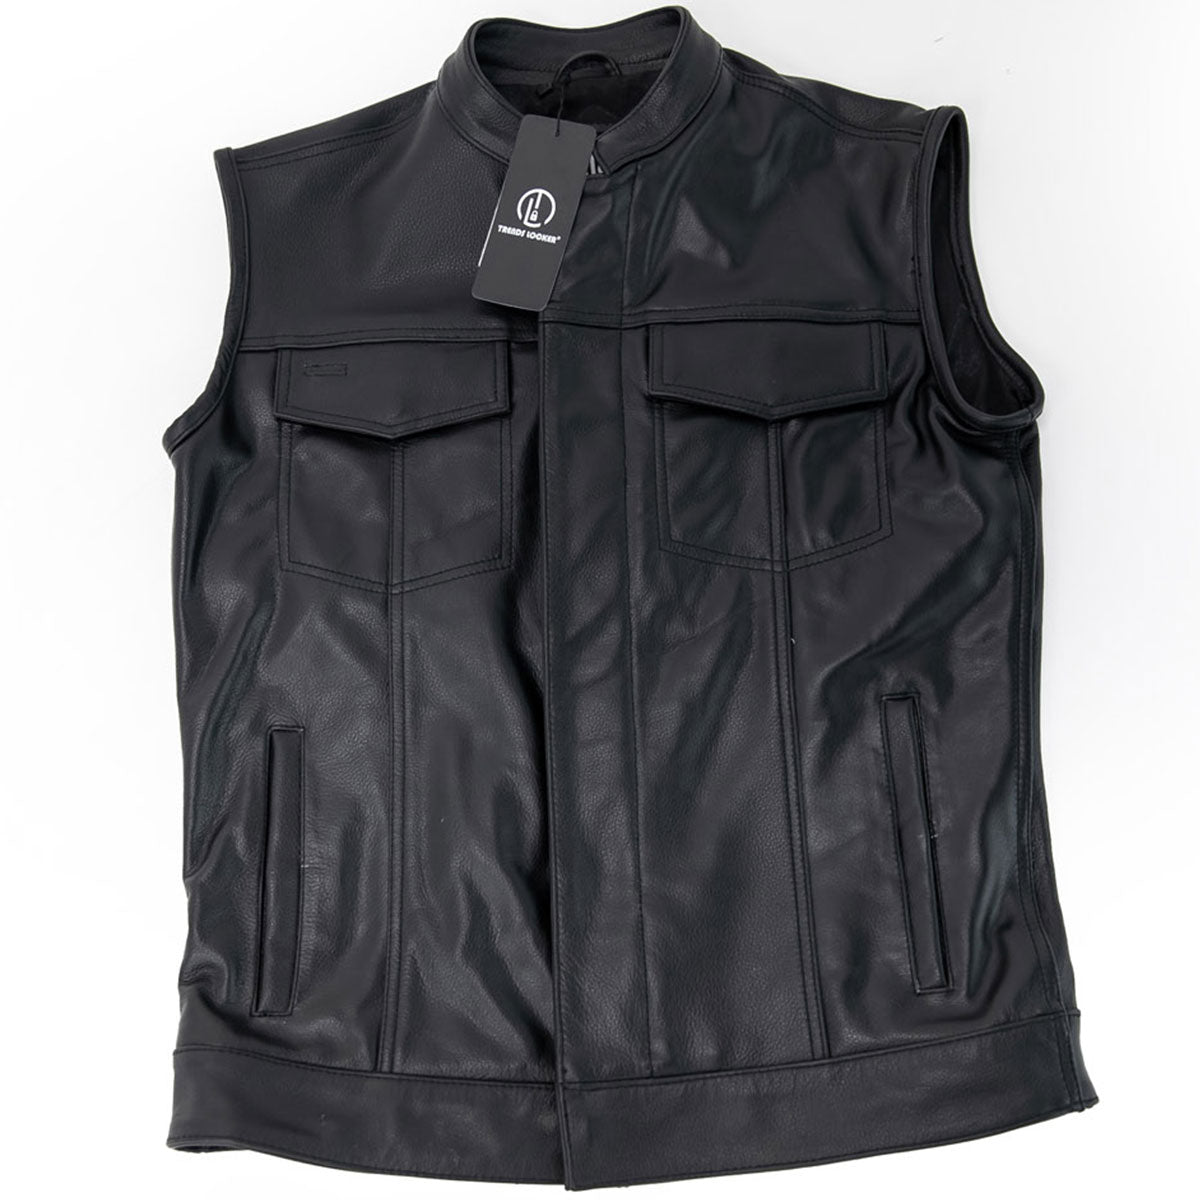 Son of Anarchy Black Leather Vest Waistcoat Gilet